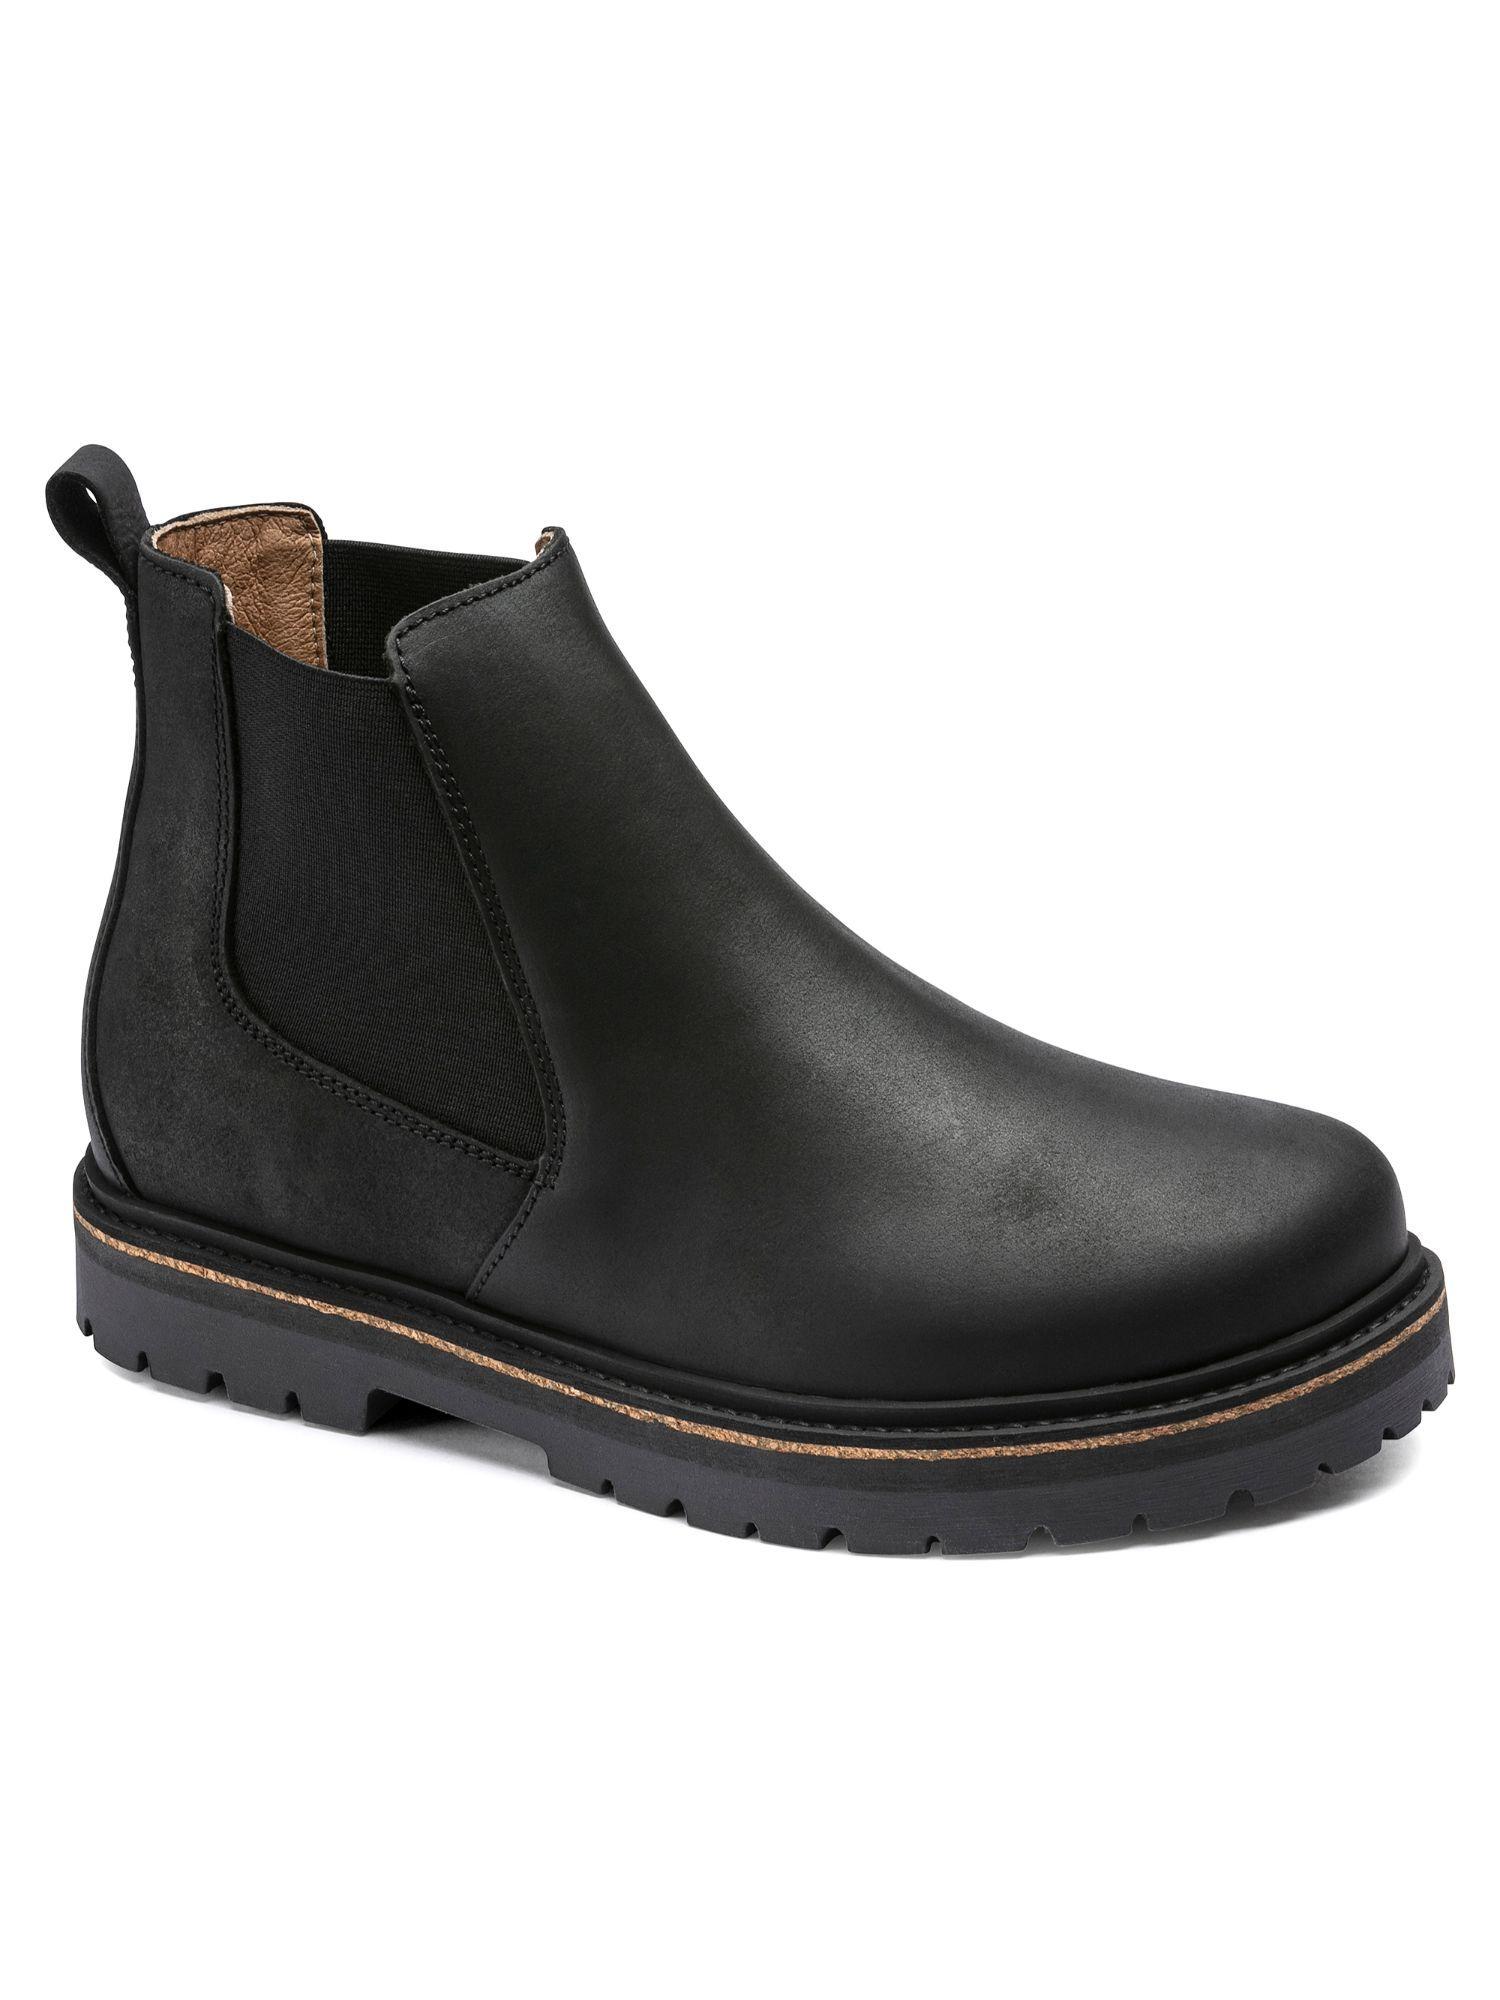 stalon nubuck leather black flat boots